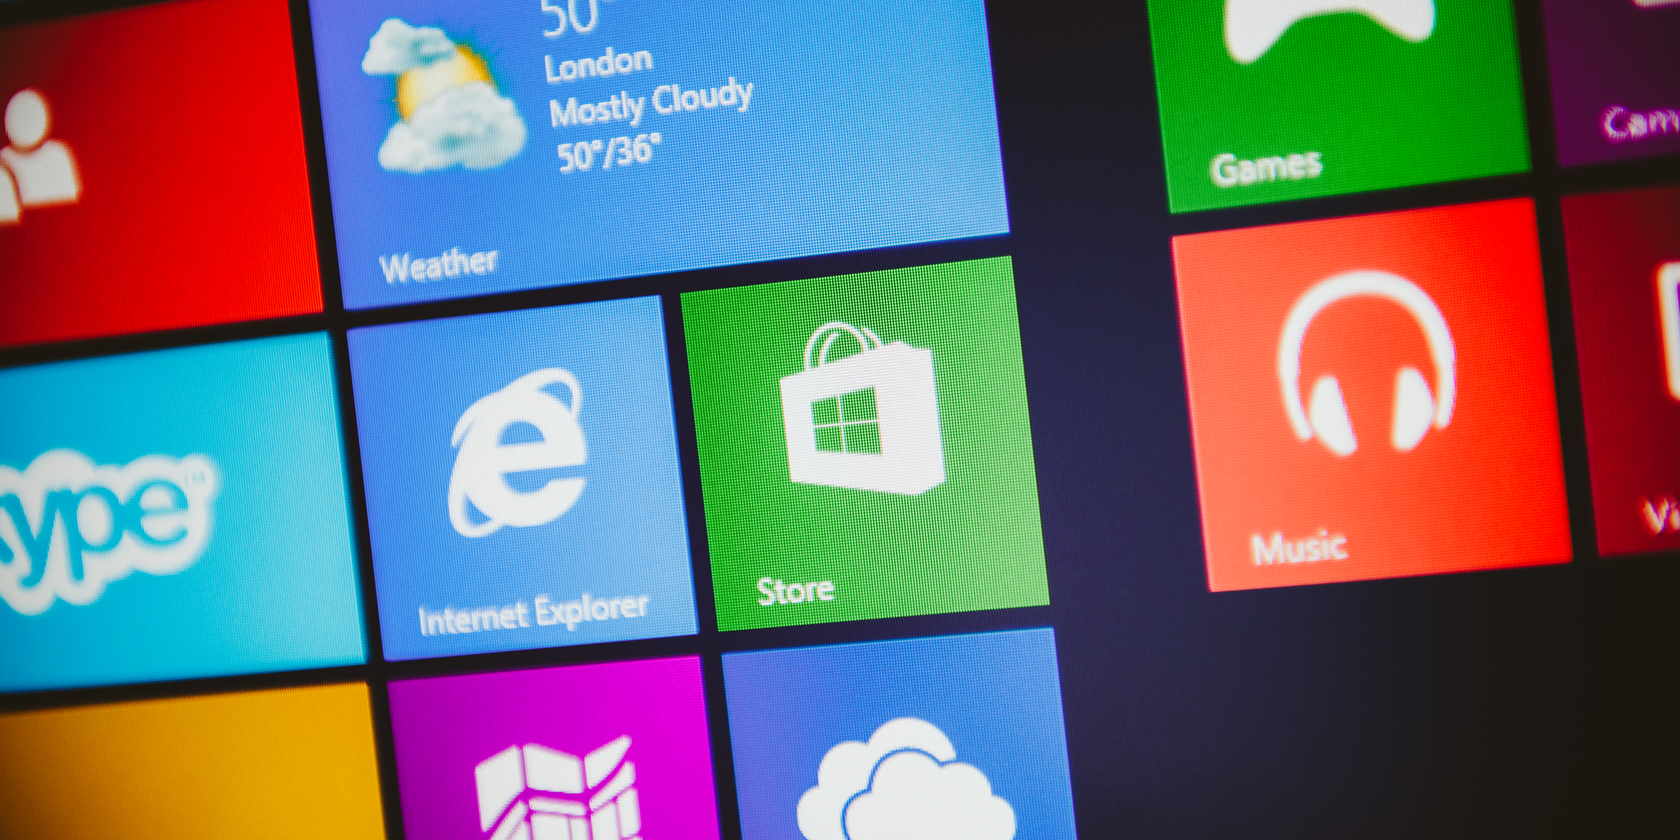 The Windows 10 app store icon